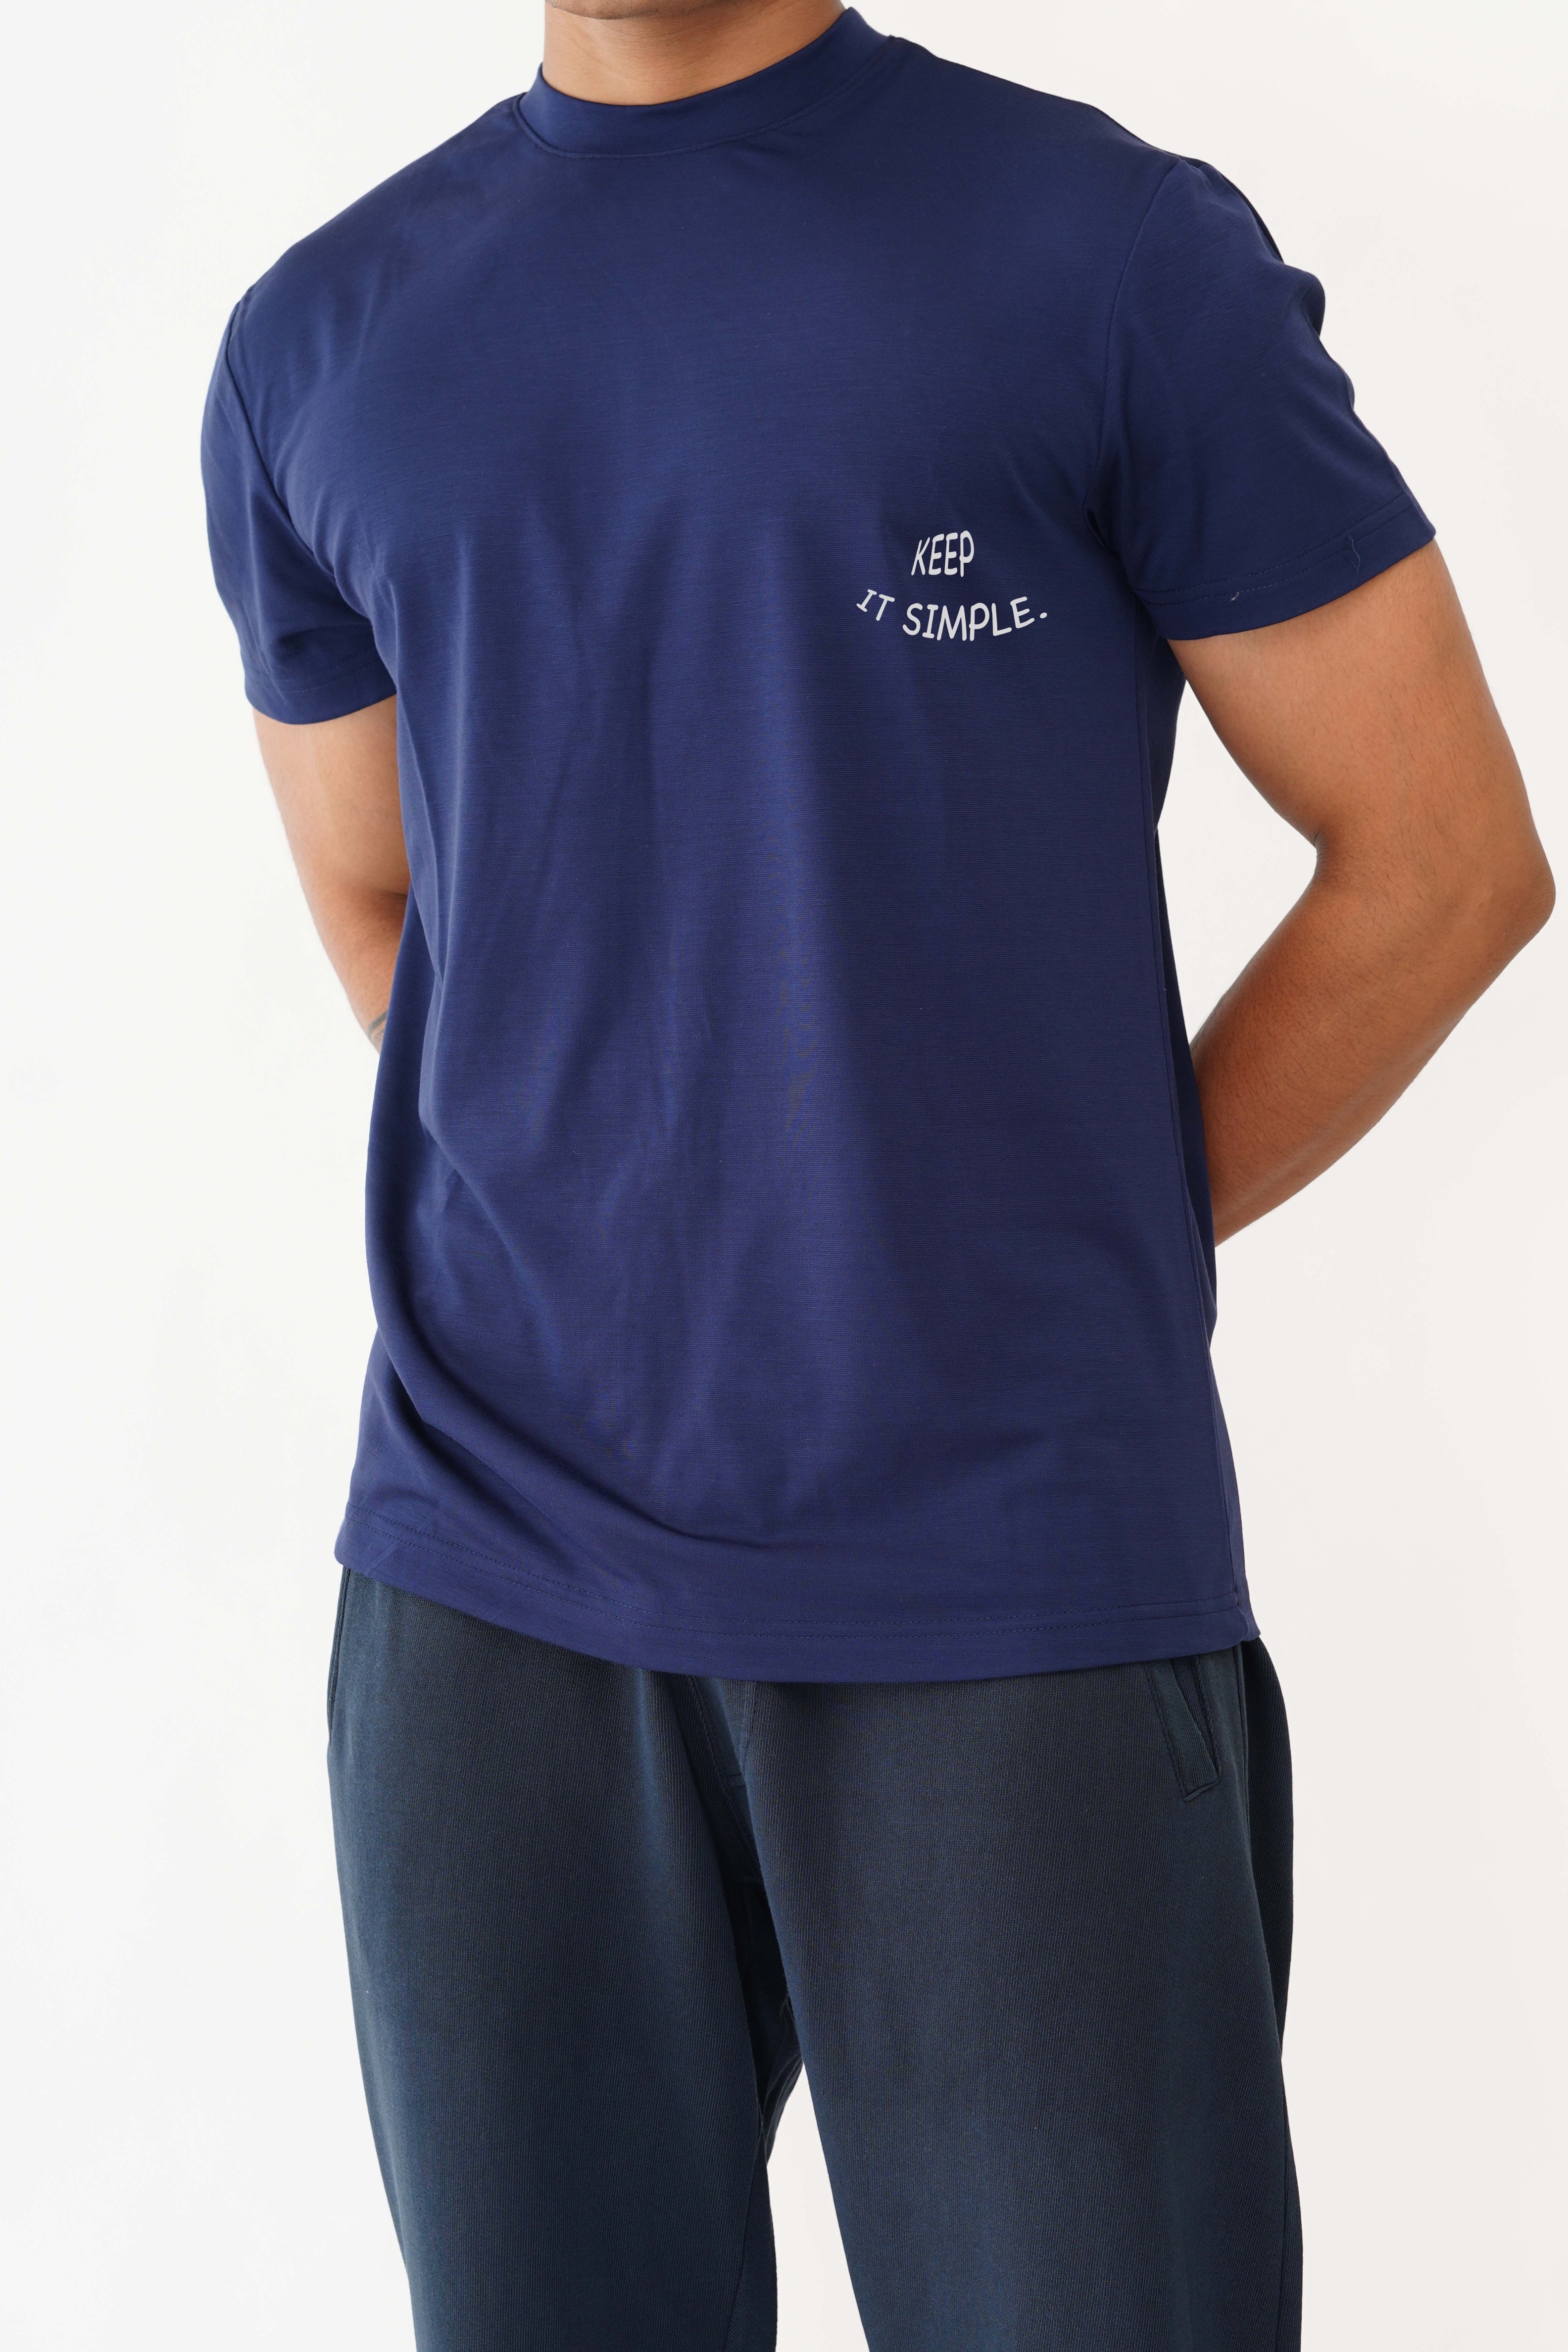 Mens 'Keep It Simple' Printed Short-sleeve Tshirt (Tencel-Stretch)